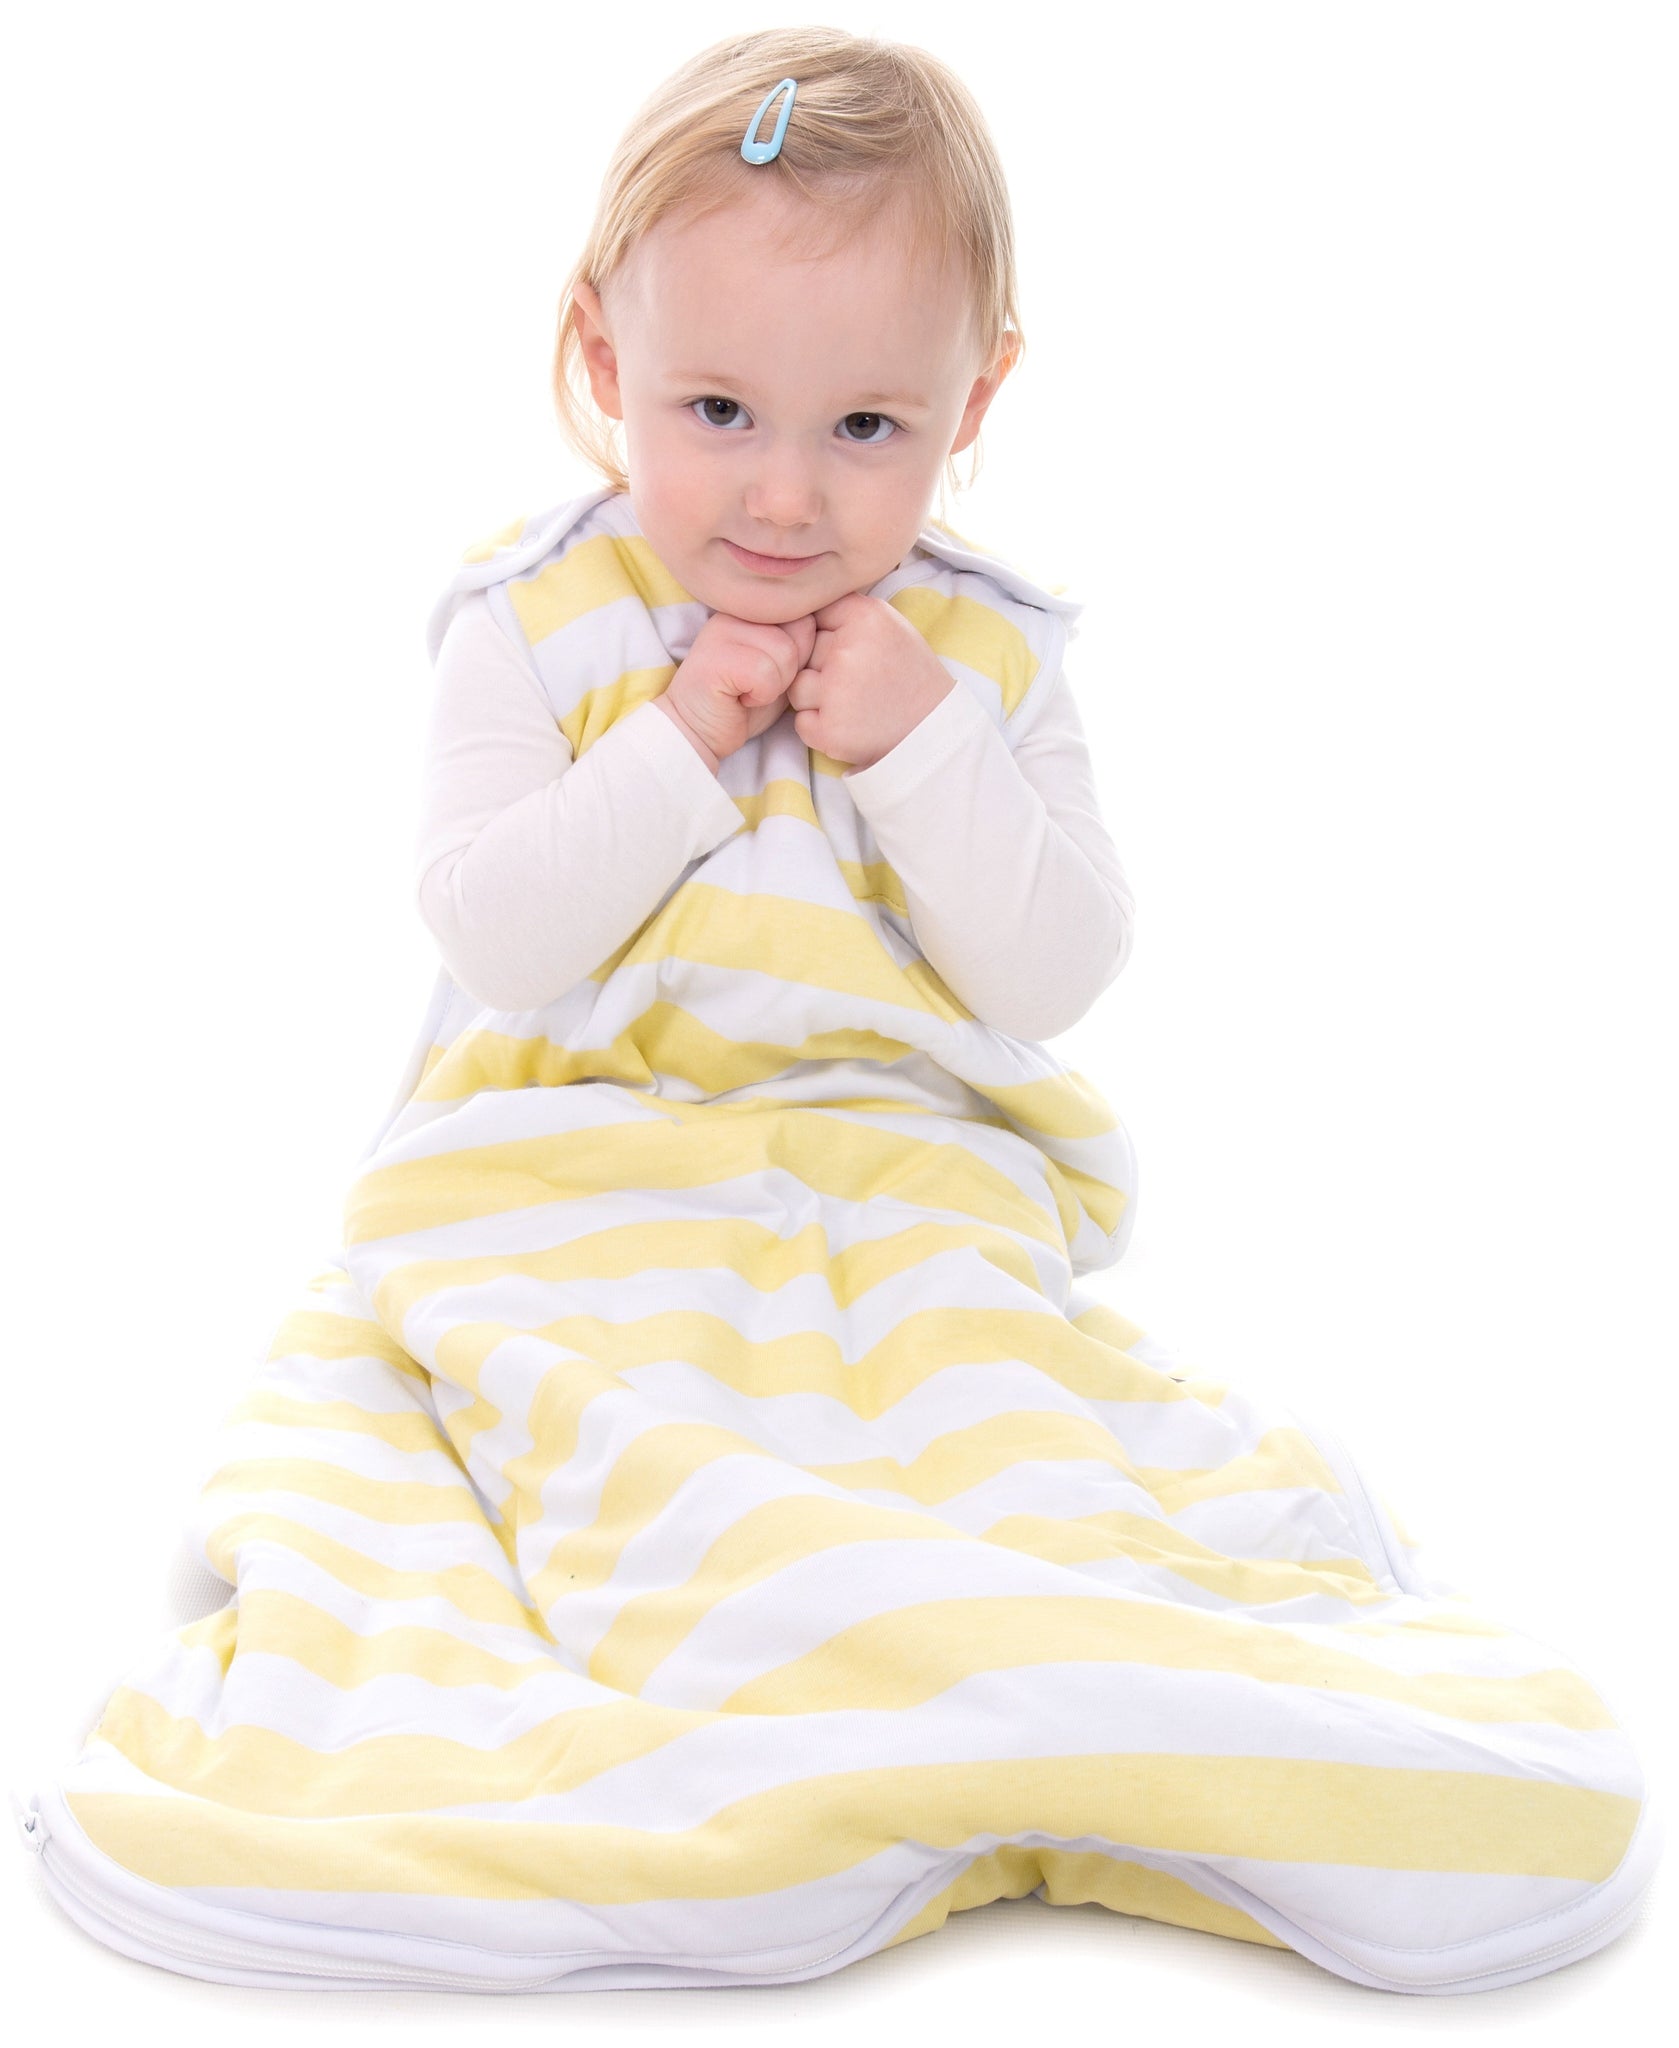 Snoozebag Baby Sleeping Bag Lemon Stripe 6-18 Months - 1.0 Tog